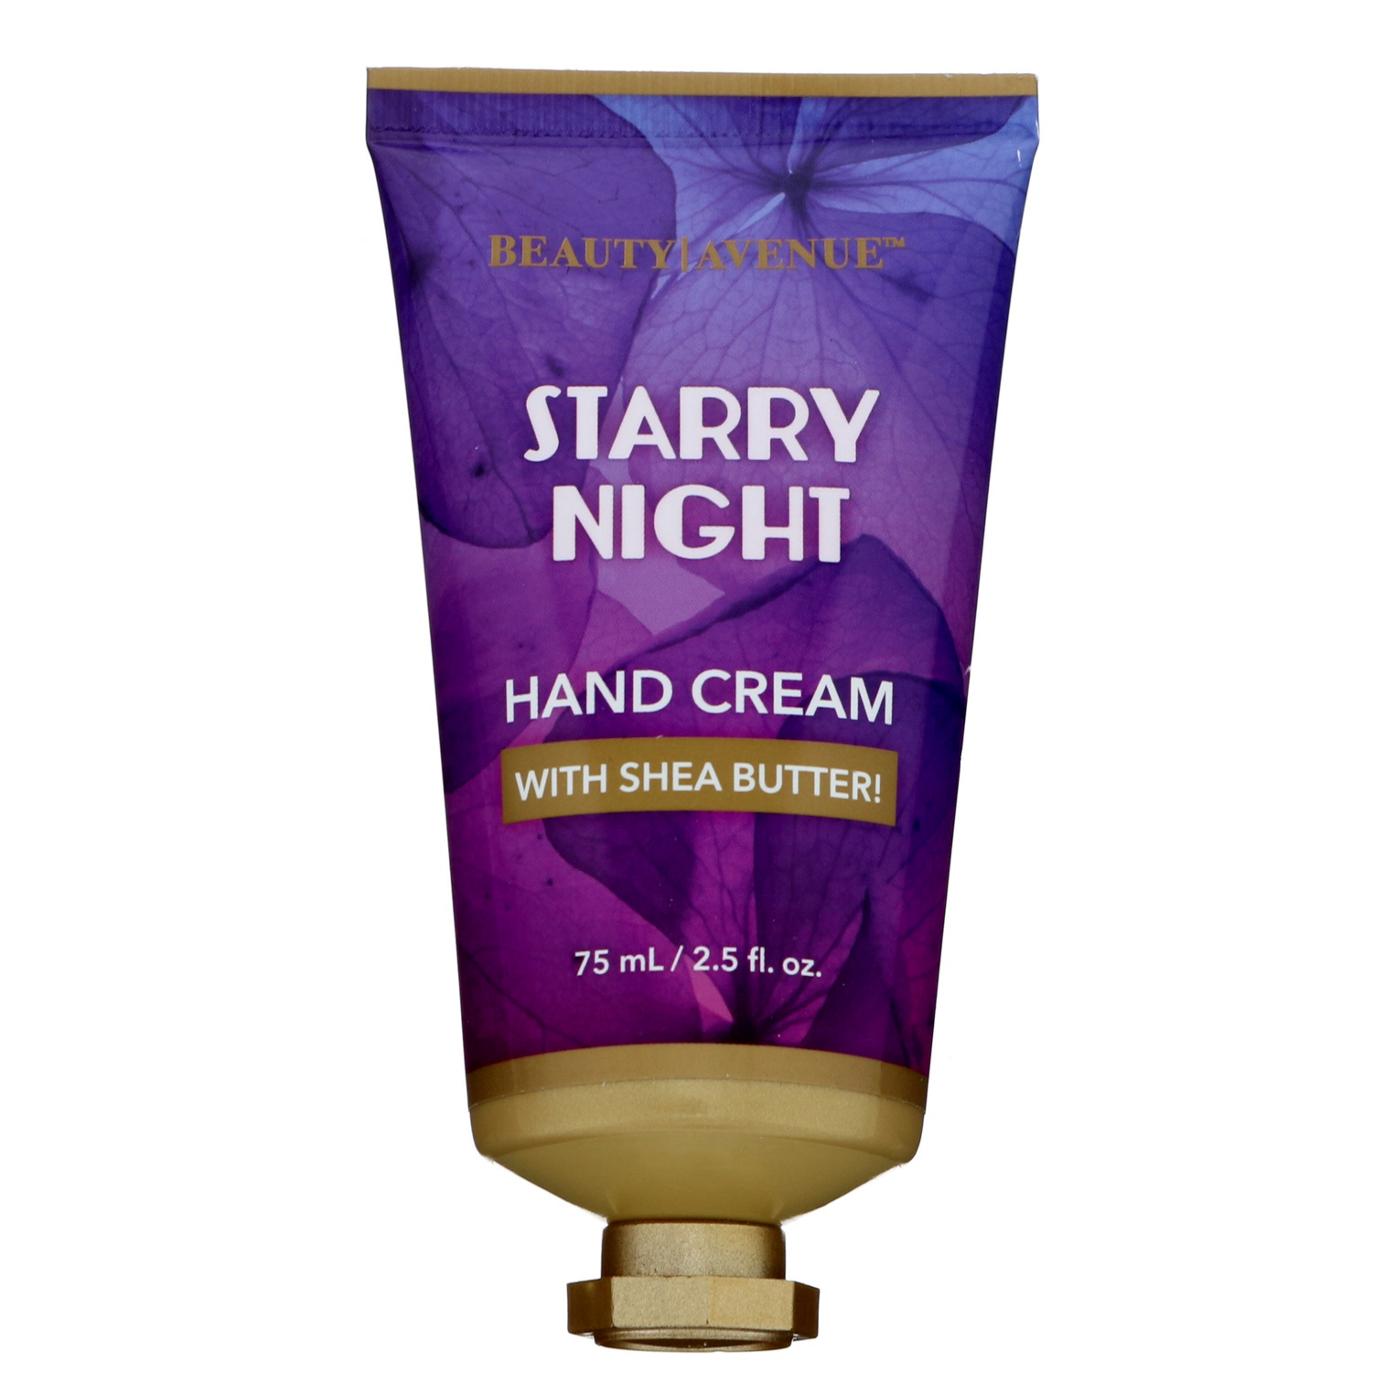 Beauty Avenue Hand Cream Starry Night Hand Cream; image 1 of 2